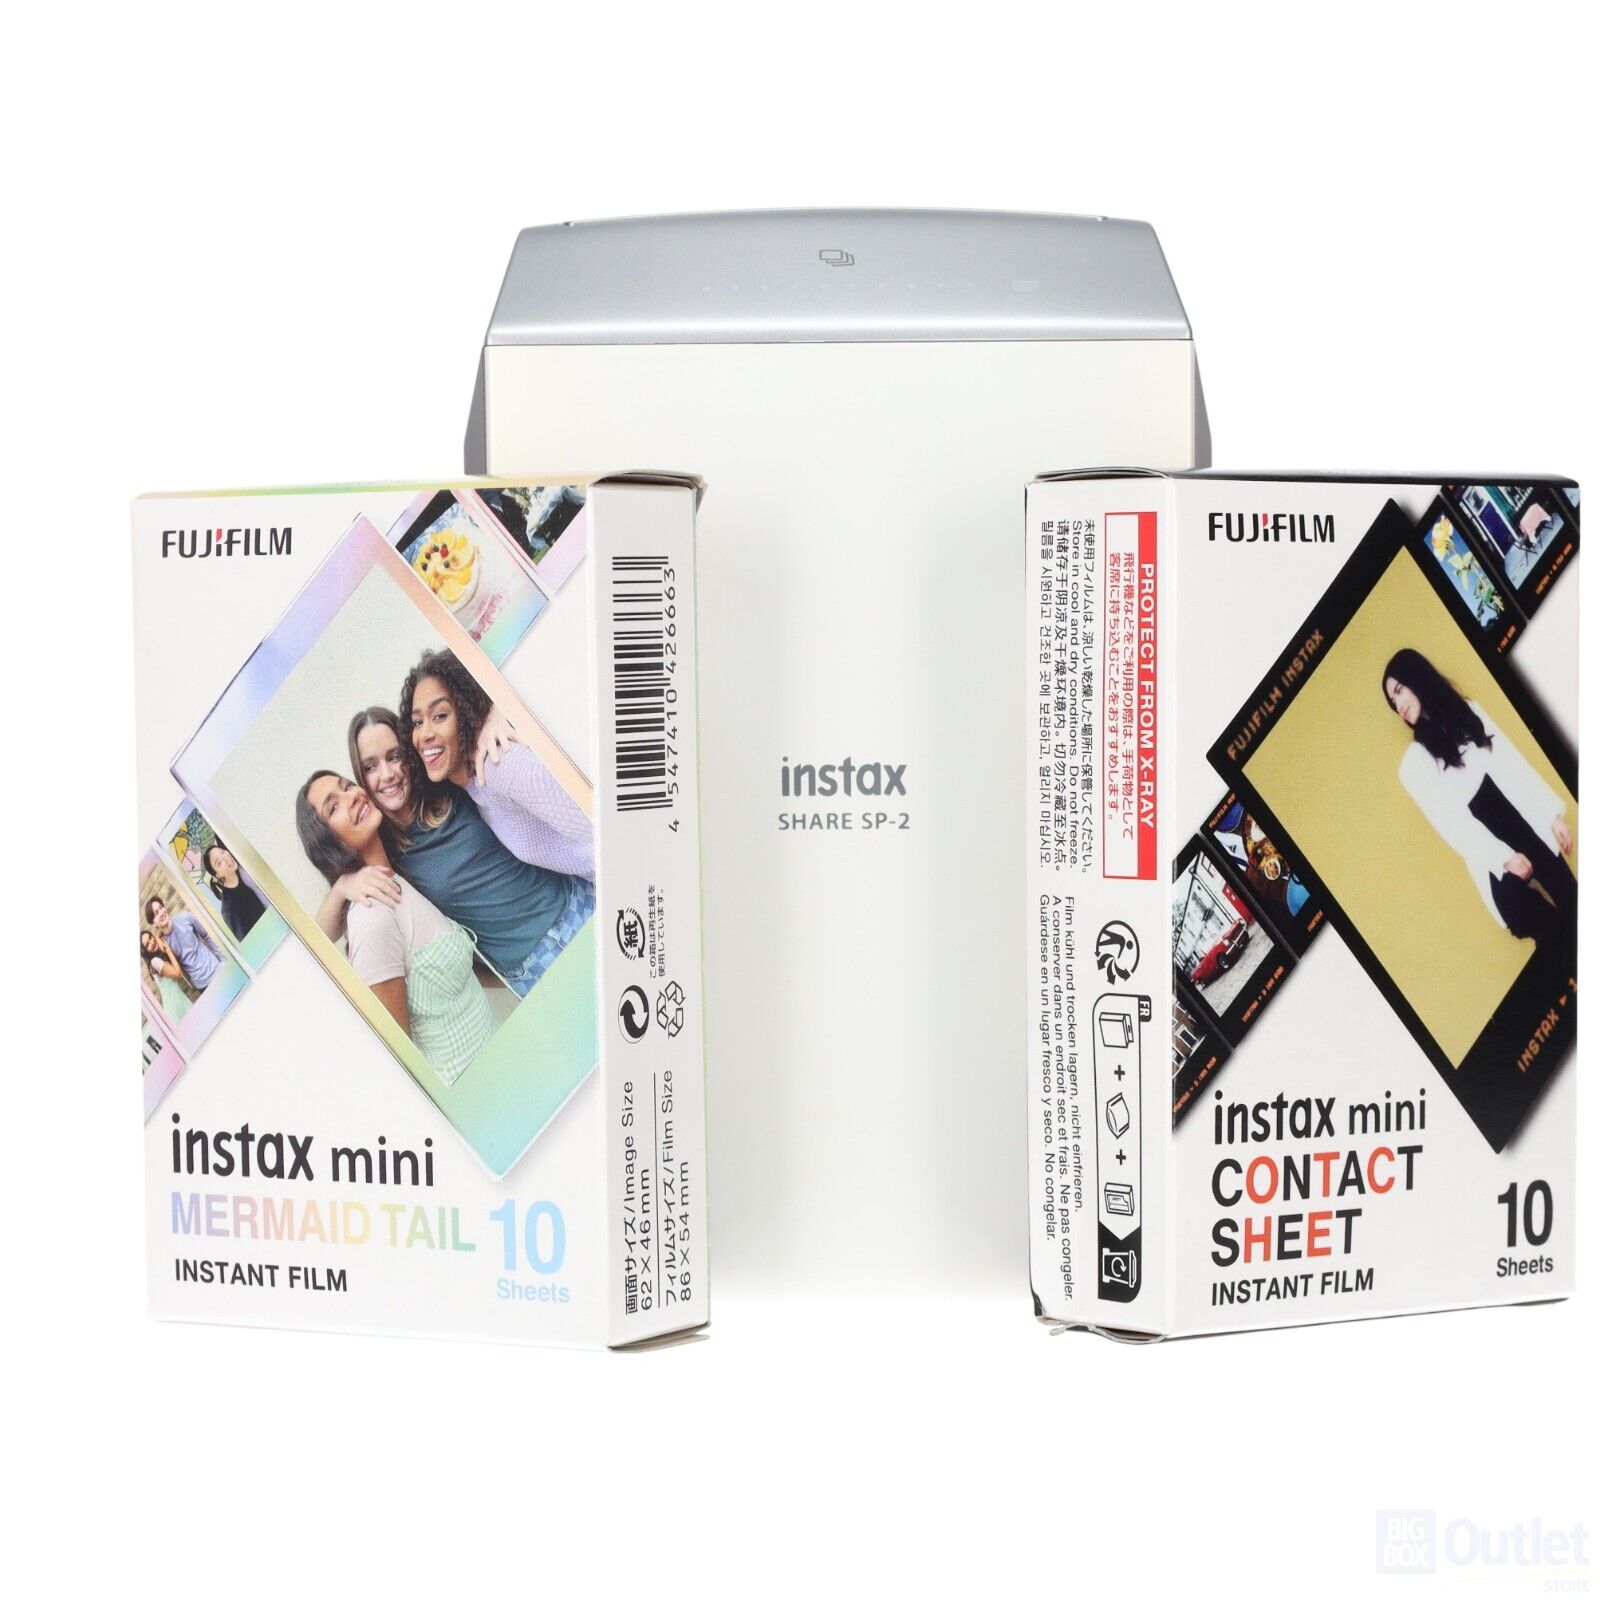 FUJIFILM - Instax Share Smartphone Printer W/ 2pk of film - SP-2 - New No Box